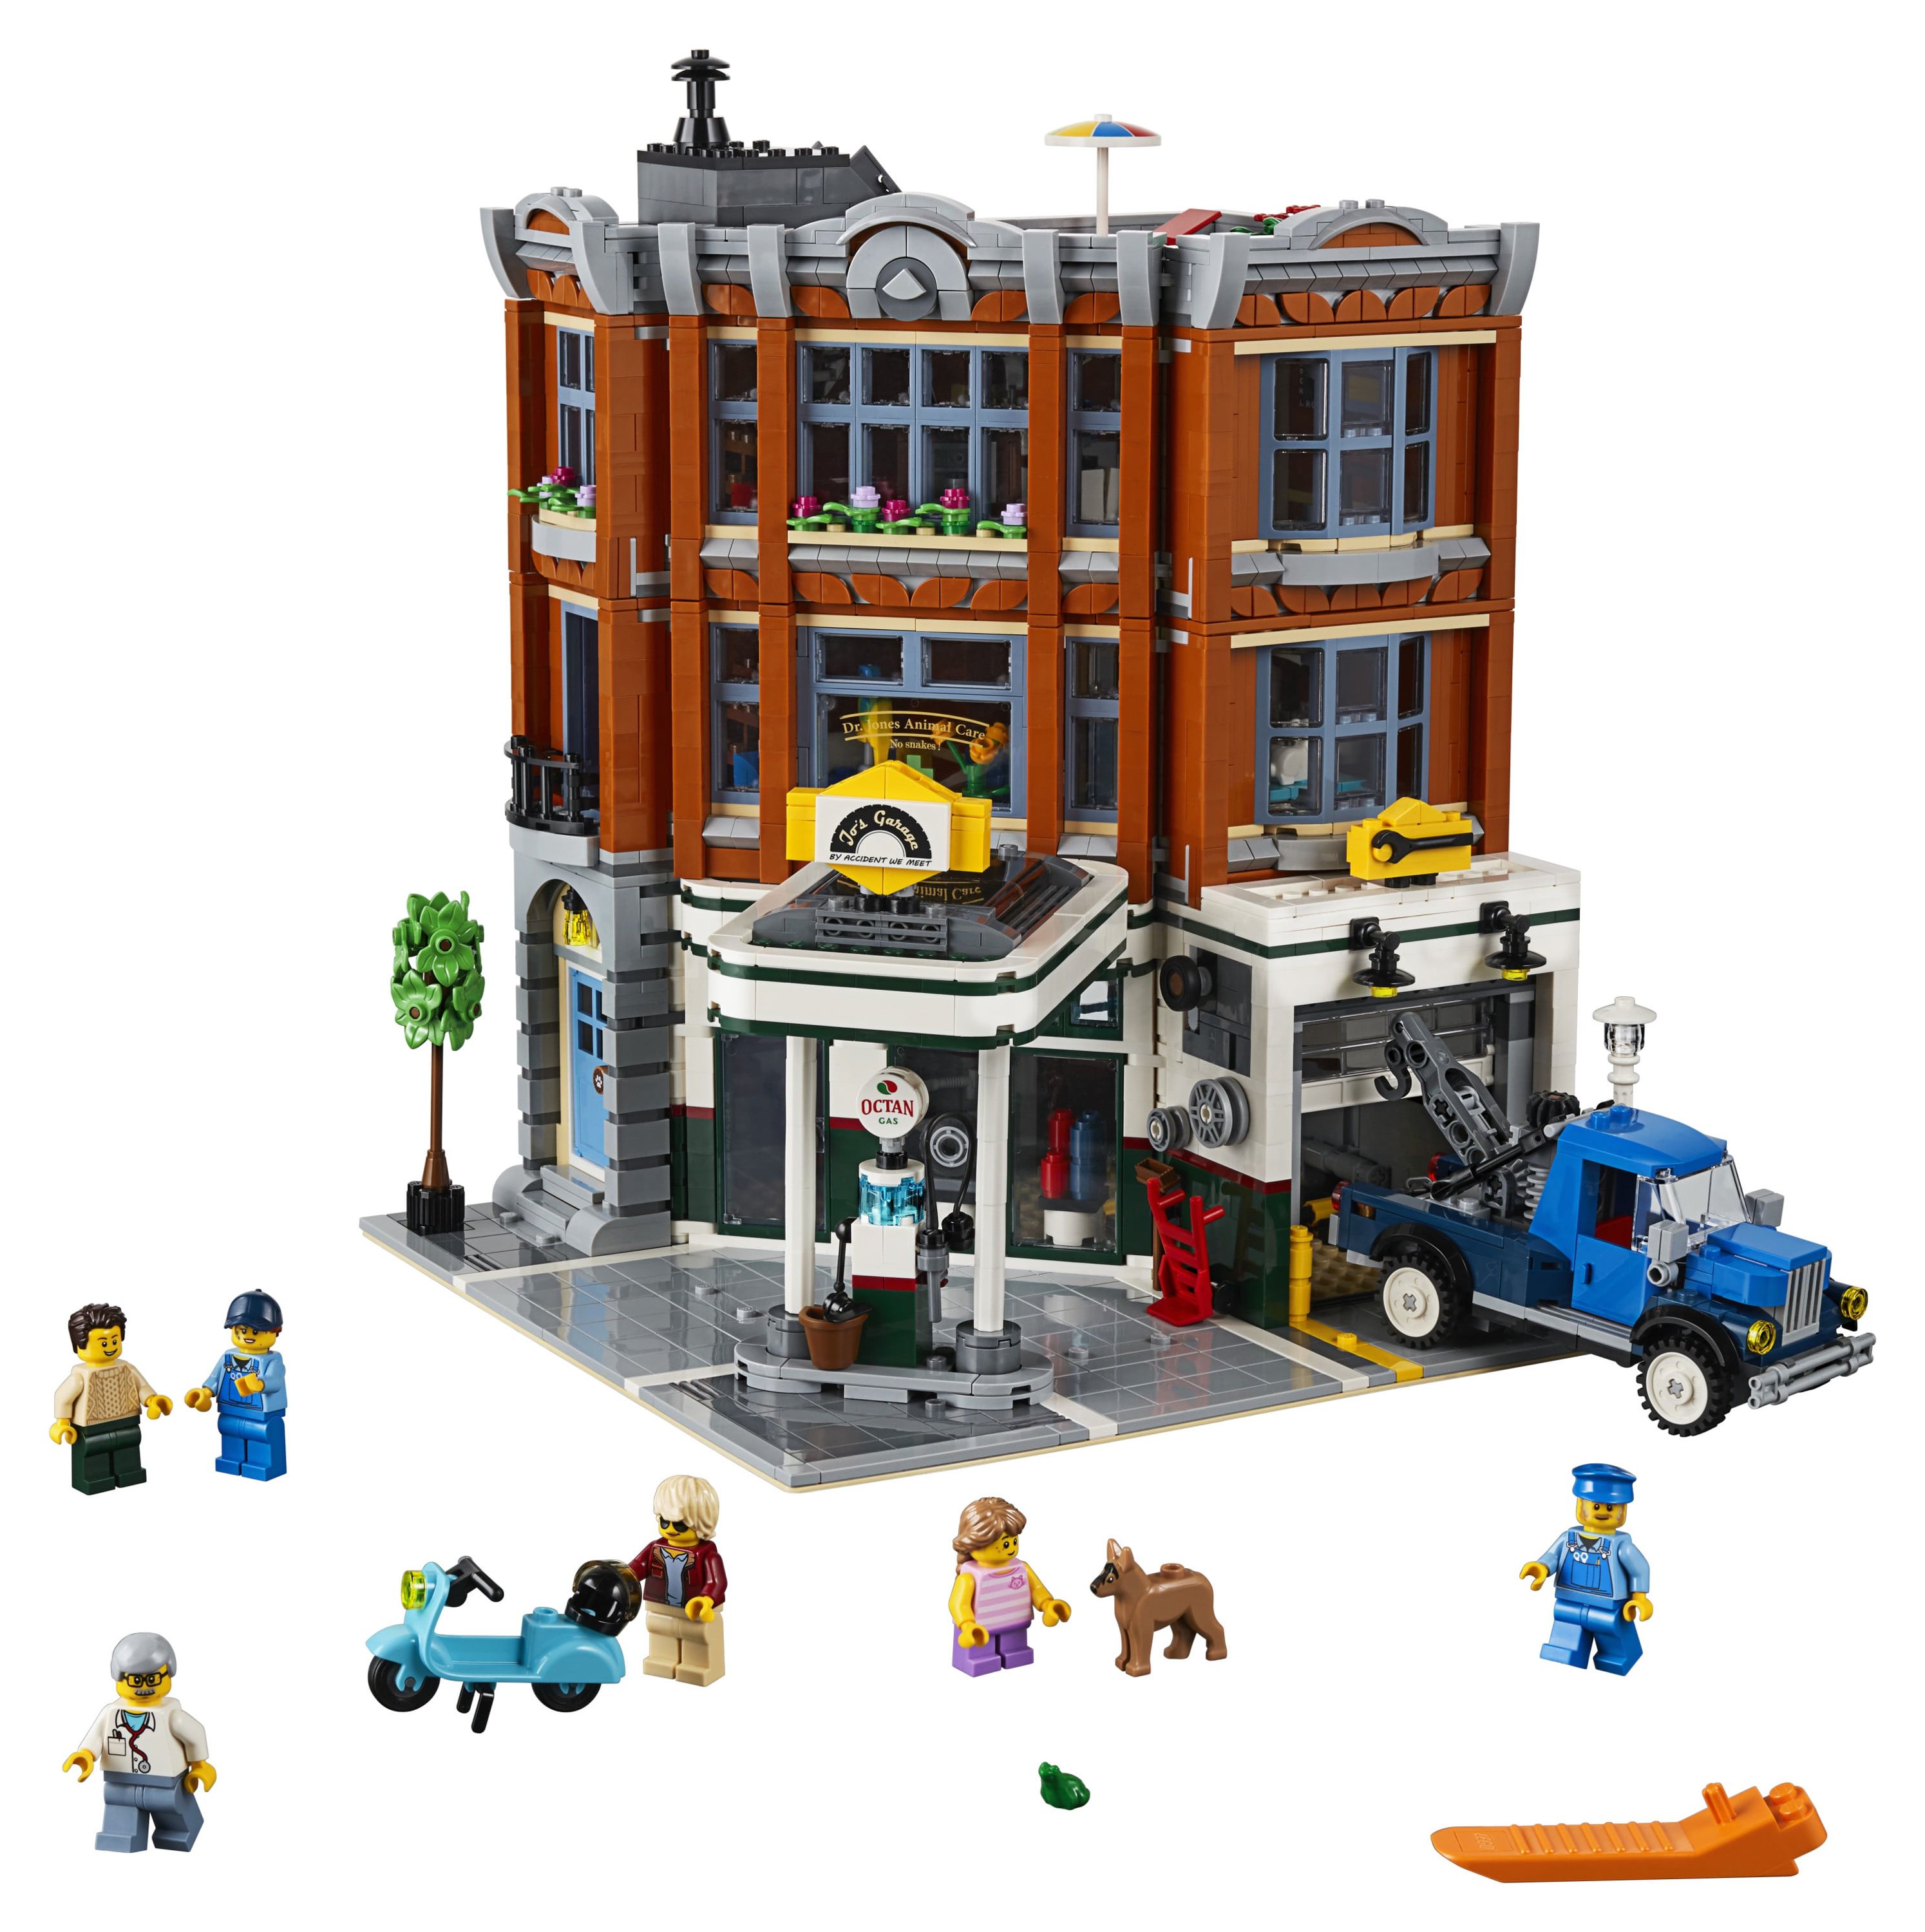 LEGO Creator Expert Corner Garage 10264 Building Set (2,569 Pieces) - image 2 of 4